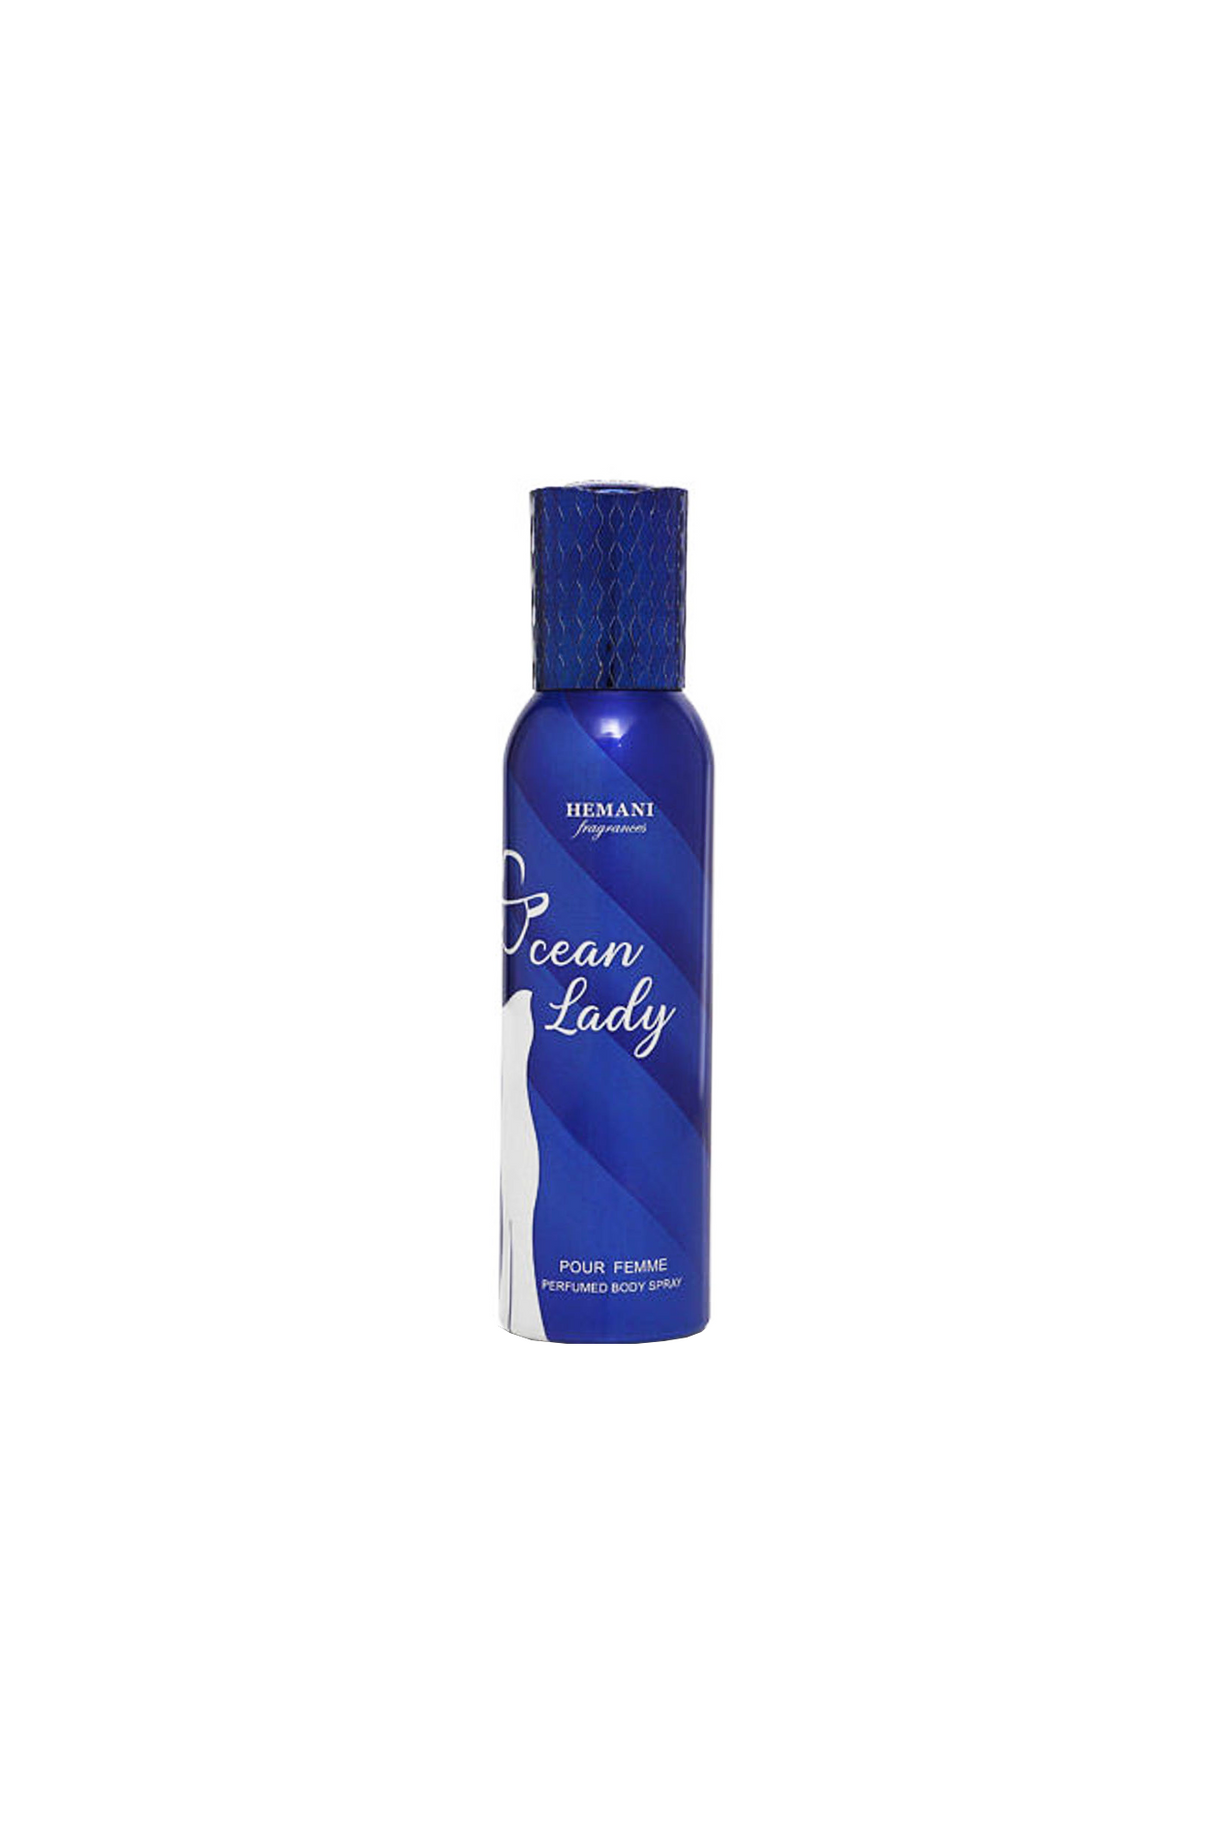 hemani ocean lady deodorant body spray 200ml for women